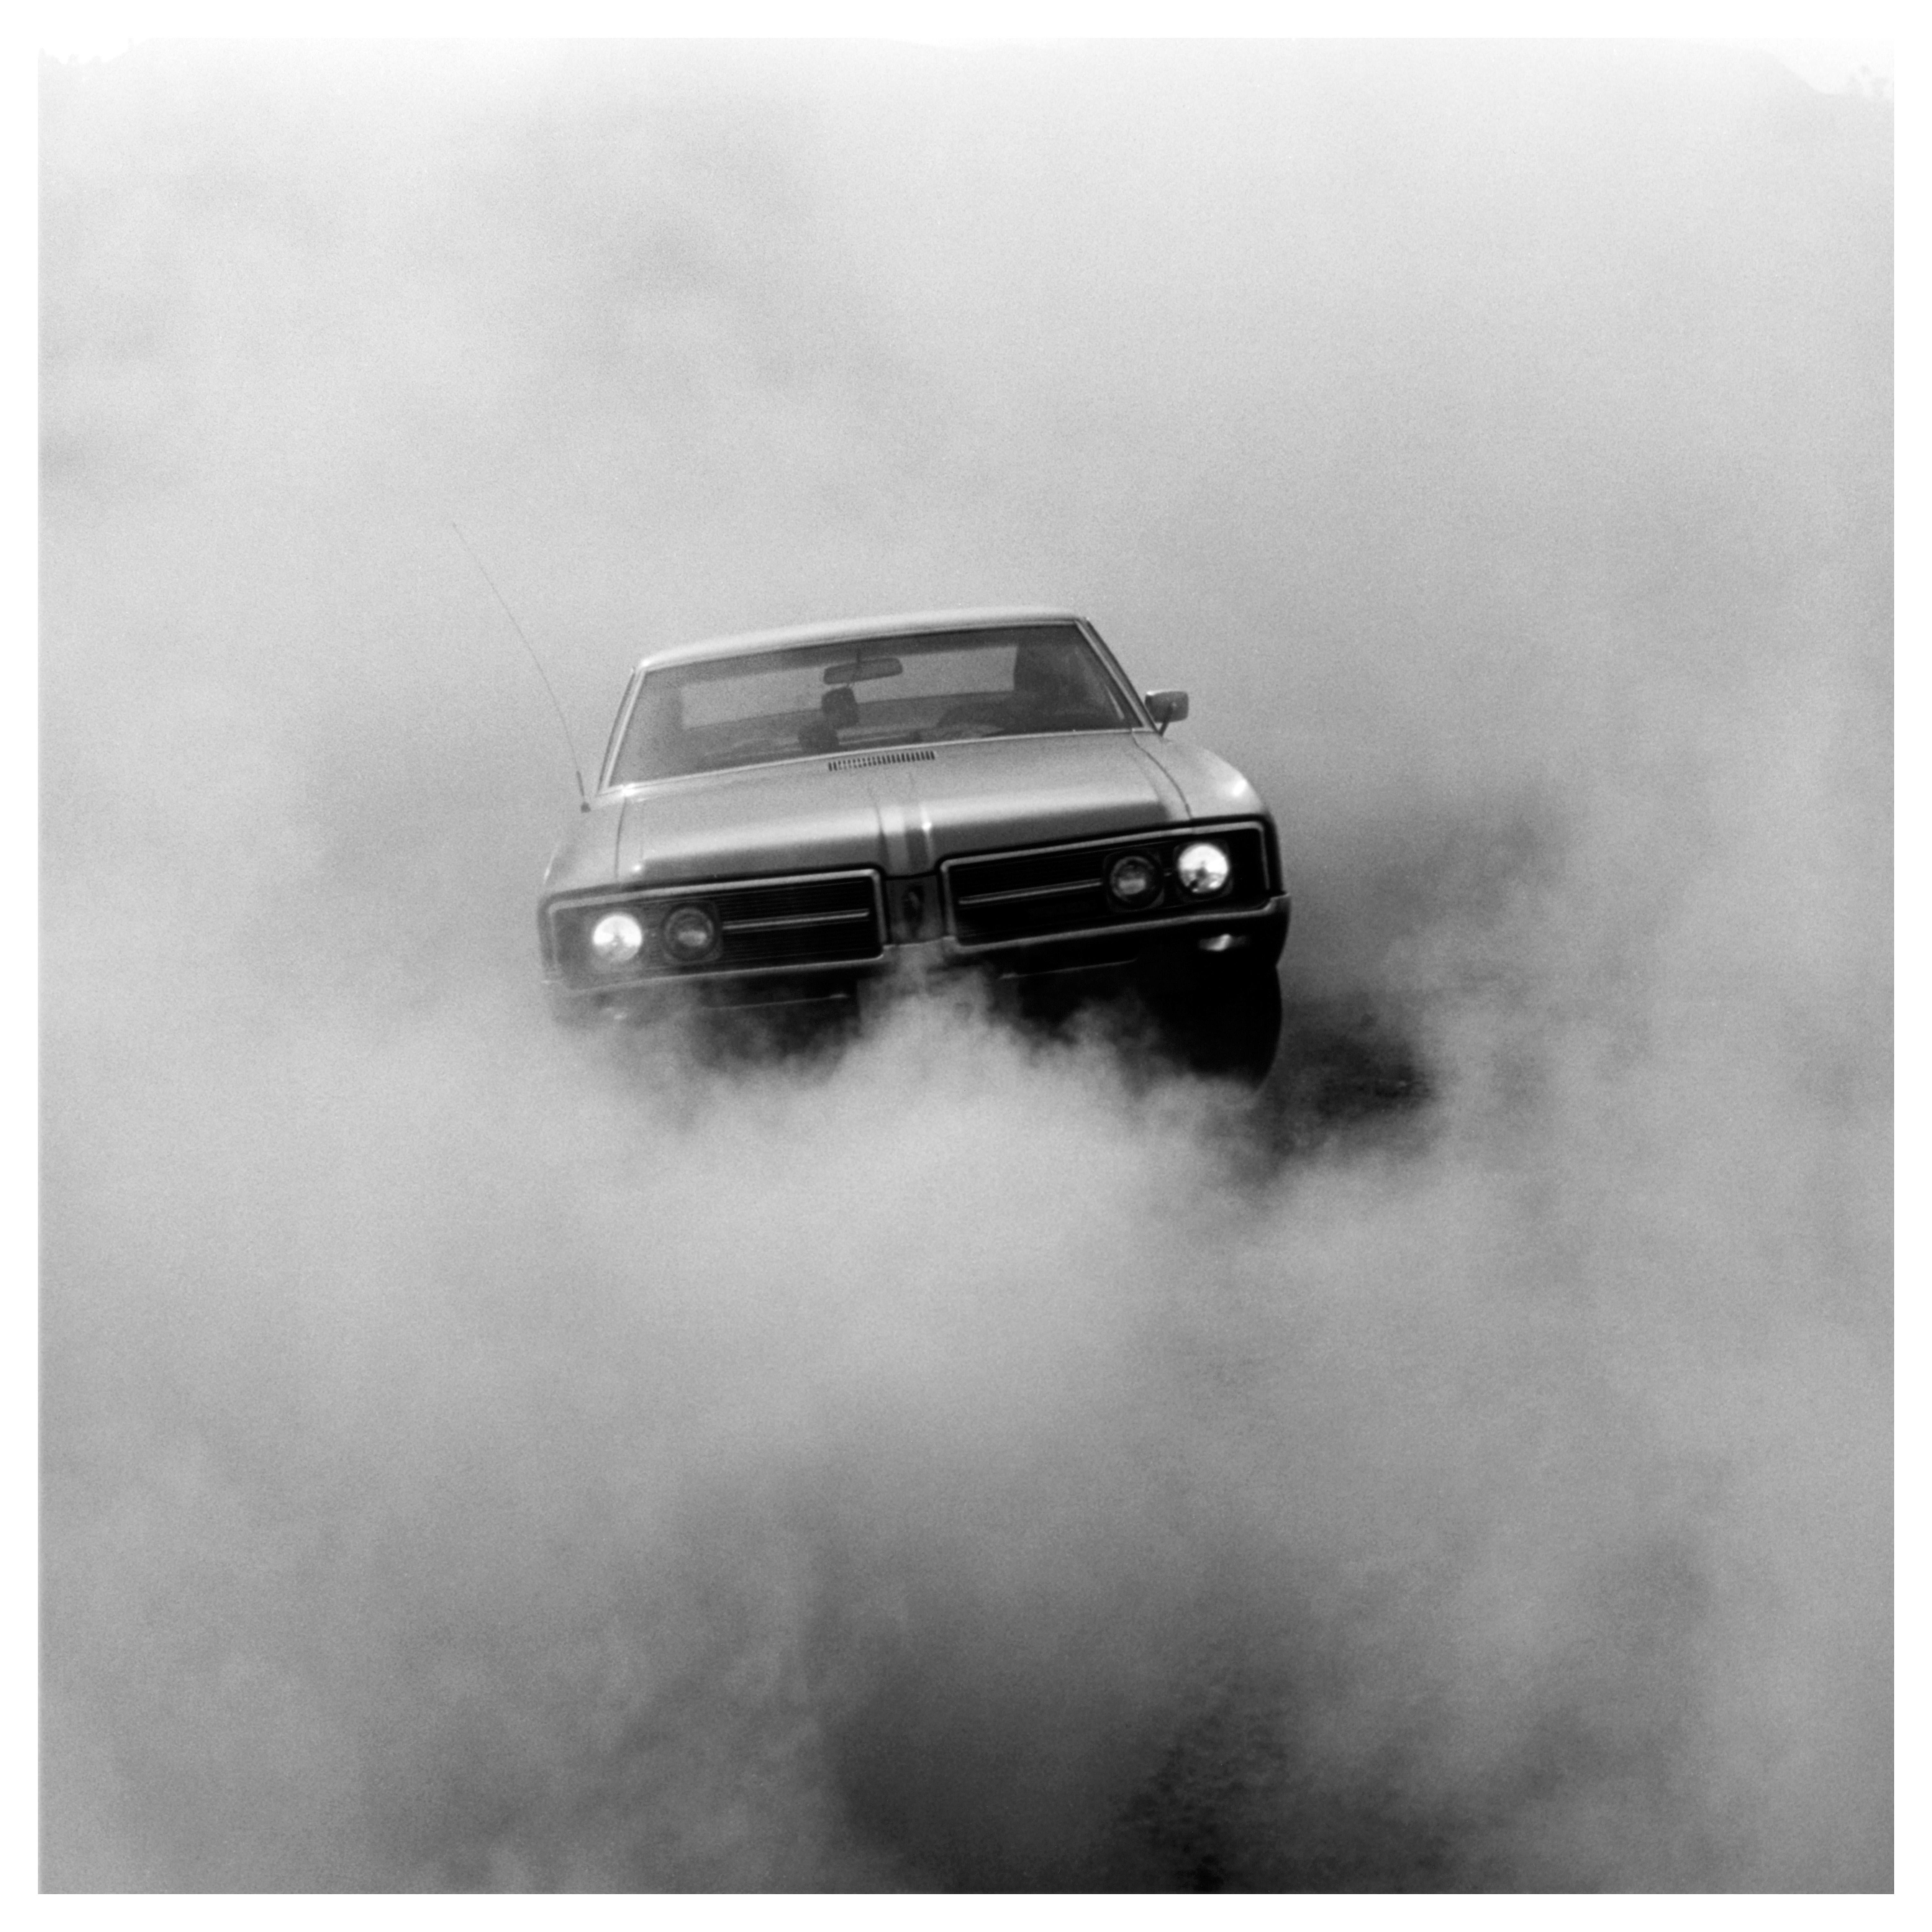 Richard Heeps Still-Life Photograph – Buick in the Dust, Hemsby – Schwarzweiße quadratische Autofotografie